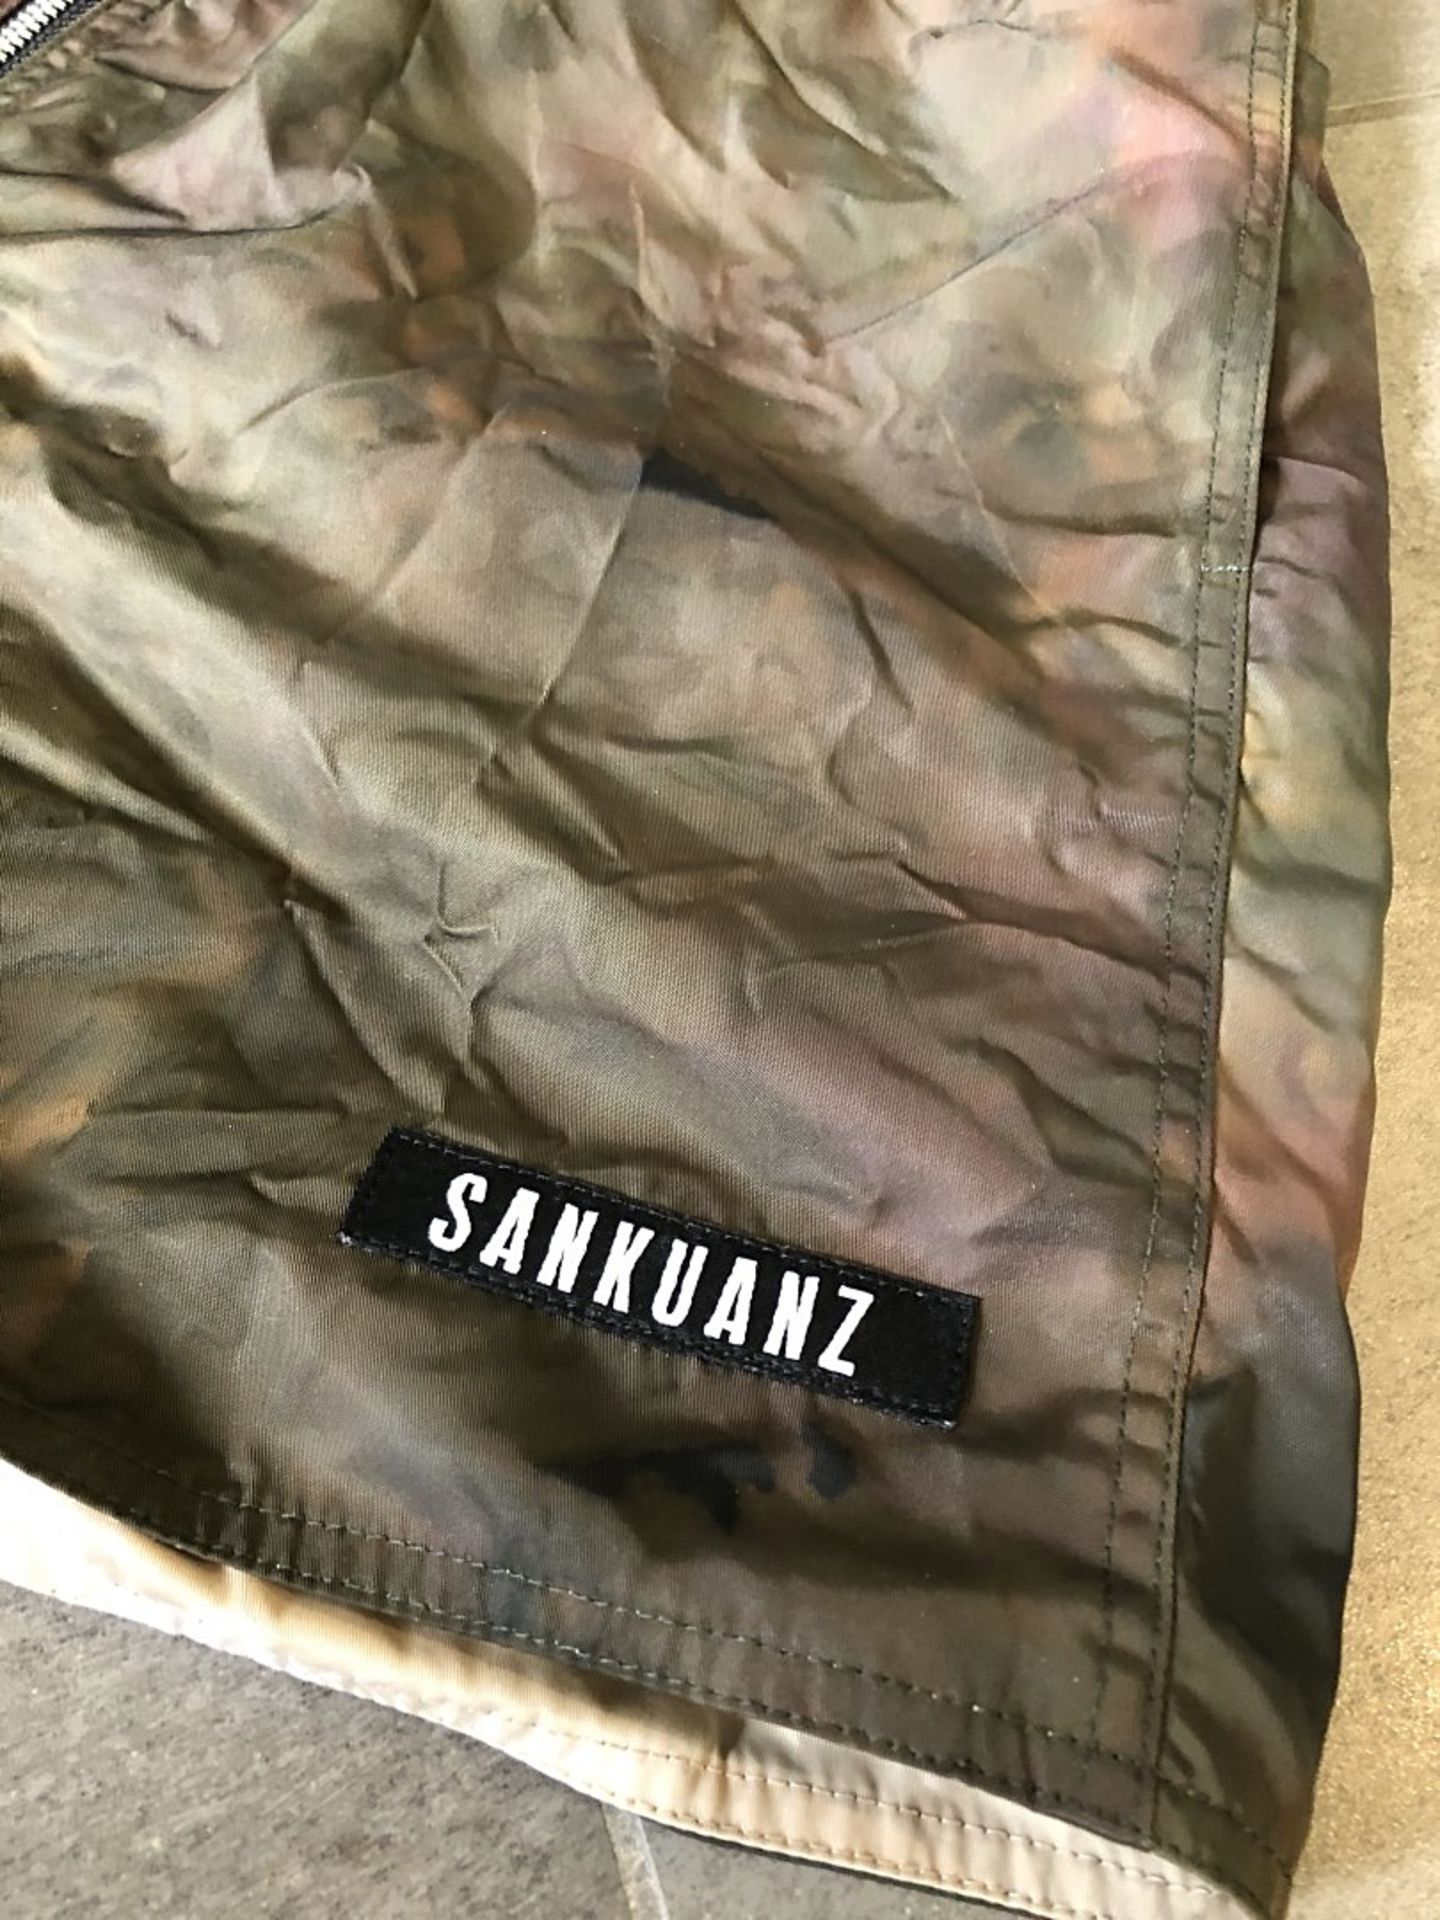 1 x Pair Of Men's Genuine Sankuaz Reversible Camo Shorts - Colour: Green / Cream - Image 4 of 6